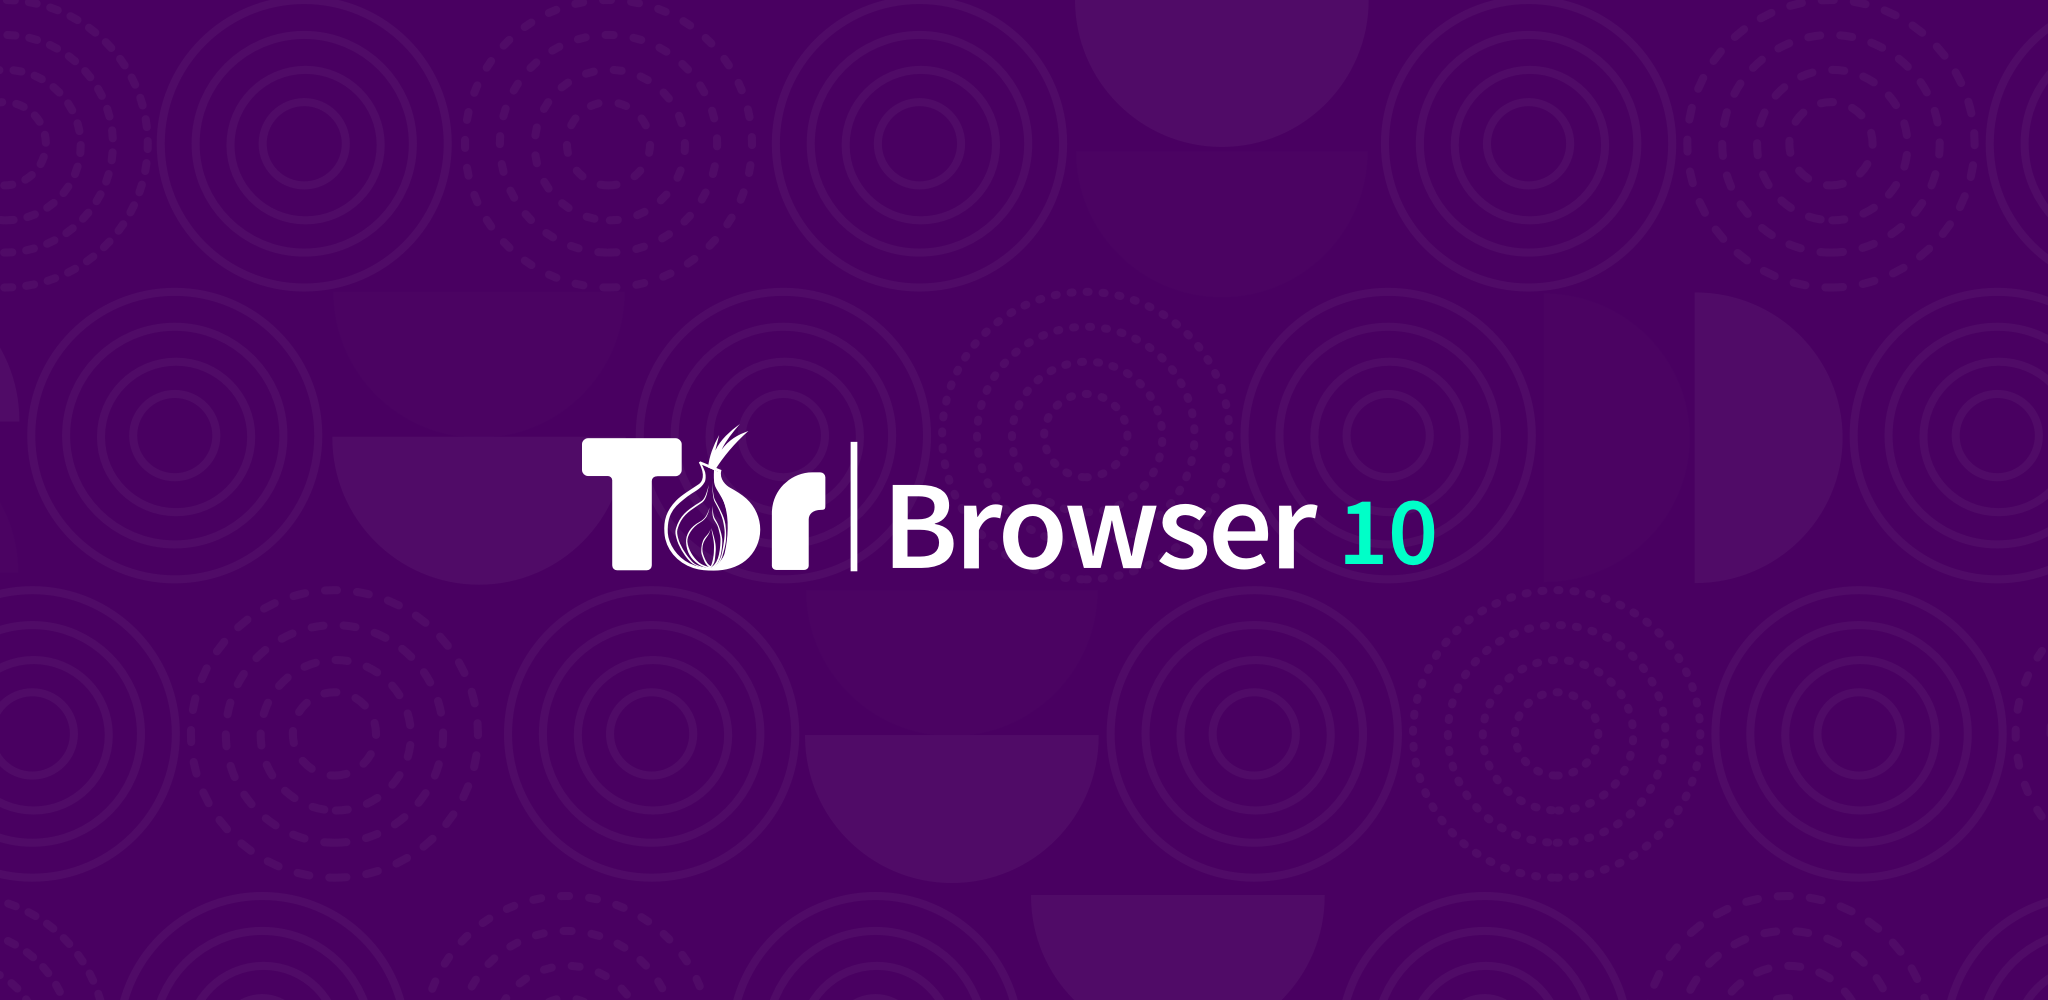 Tor im browser bundle windows mega tor browser скачать на русском языке mega